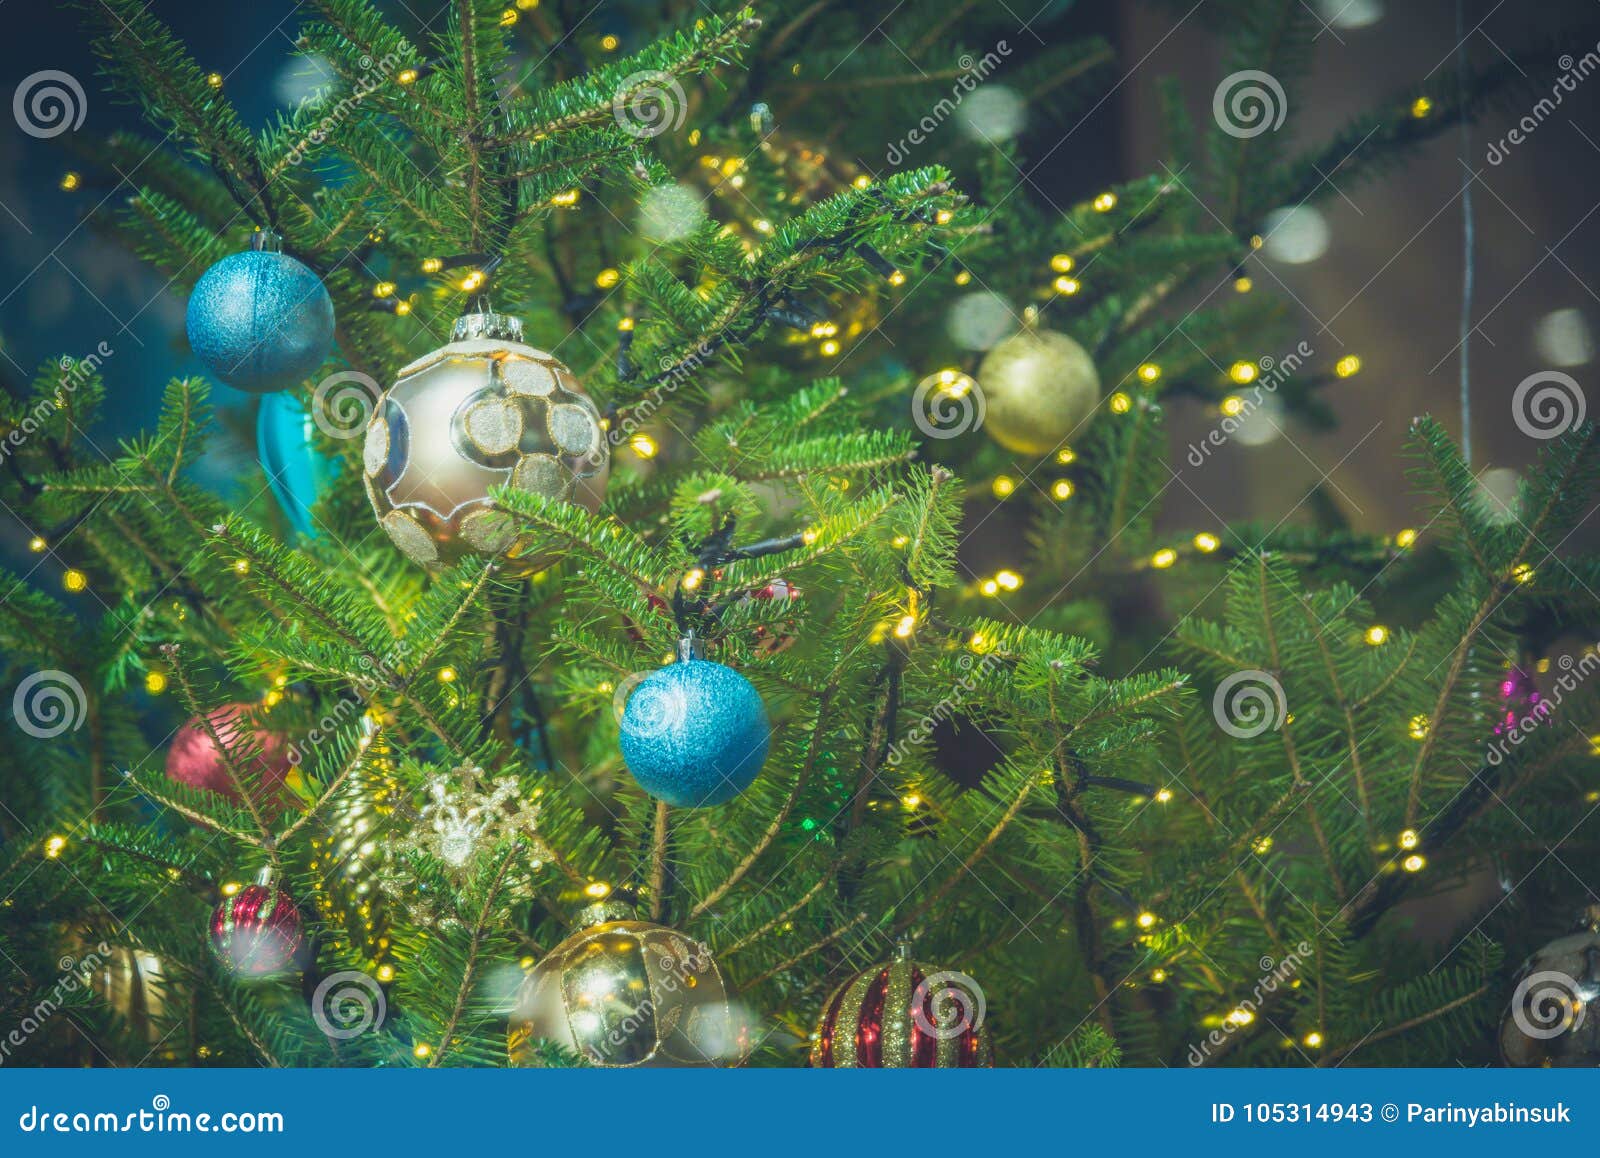 Christmas Ornaments on the Christmas Tree Stock Image - Image of merry ...